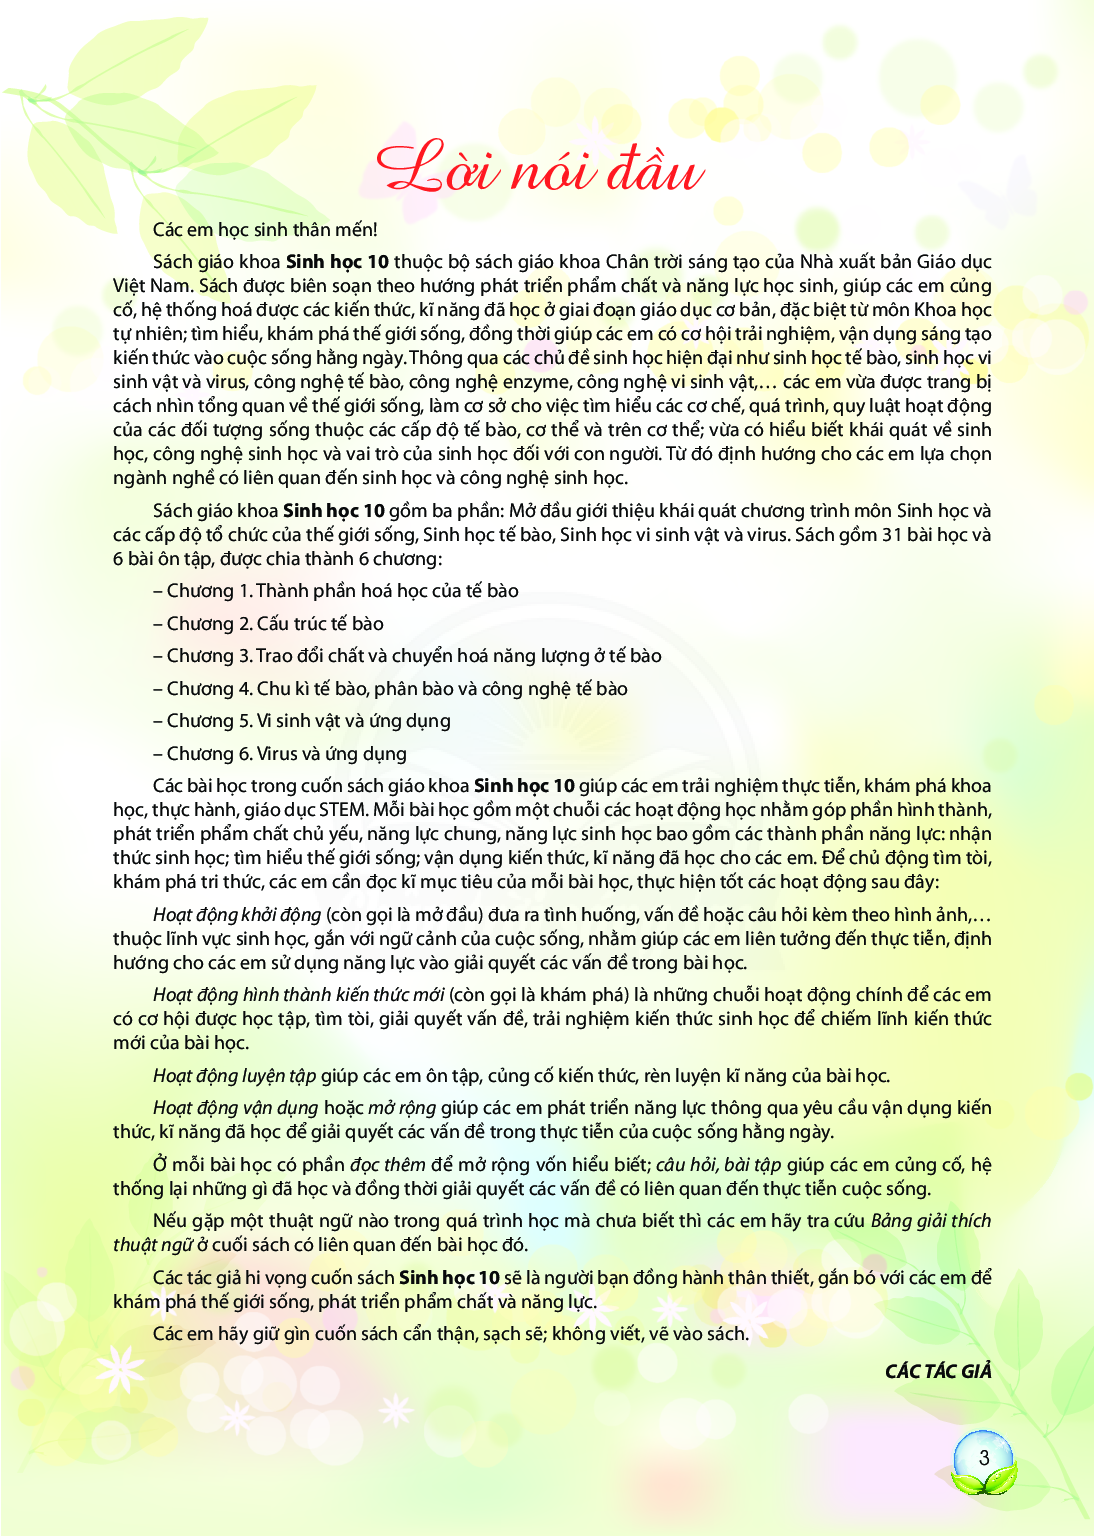 Sinh học lớp 10 Chân trời sáng tạo pdf (trang 4)